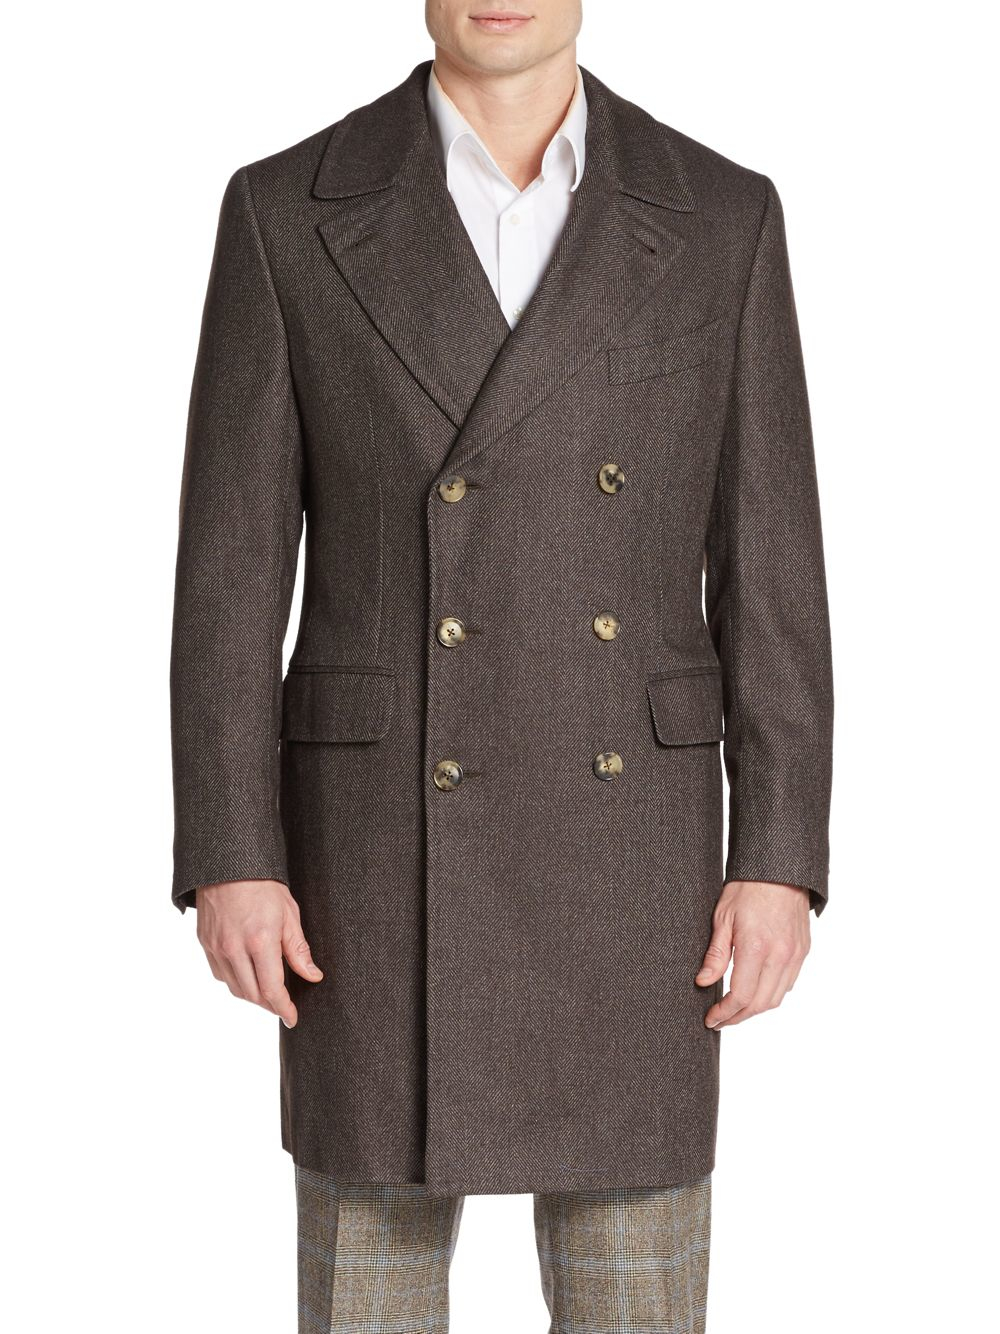 Lyst - Isaia Wool-blend Herringbone Double-breasted Coat in Brown for Men